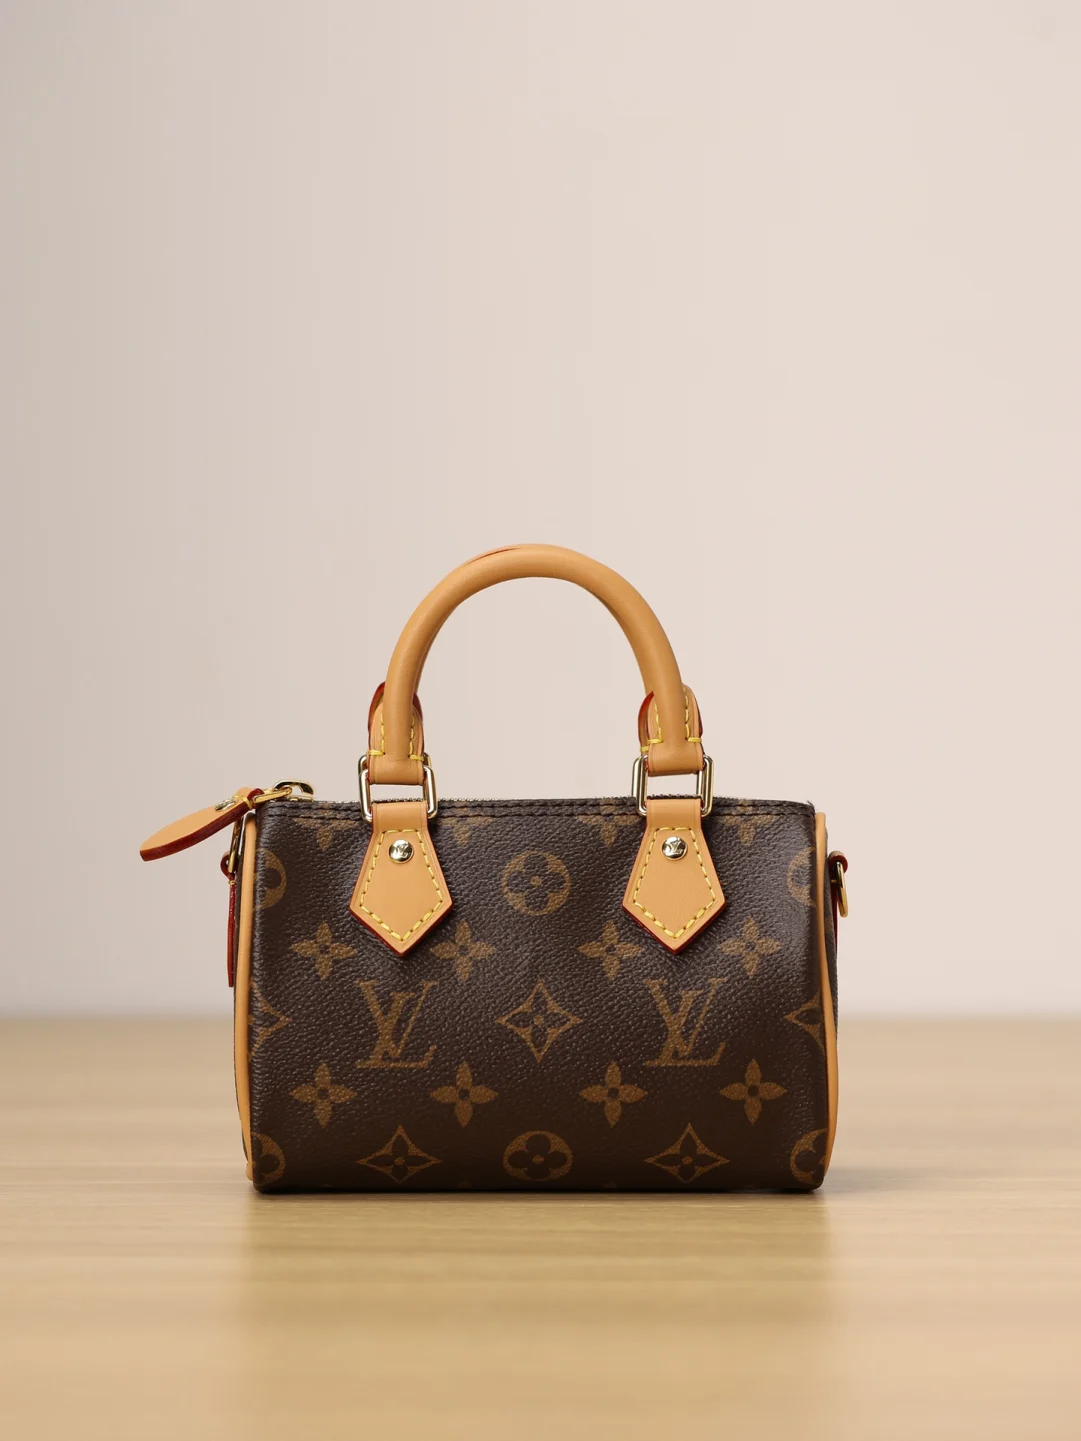 High Quality Replica Louis Vuitton Handbags